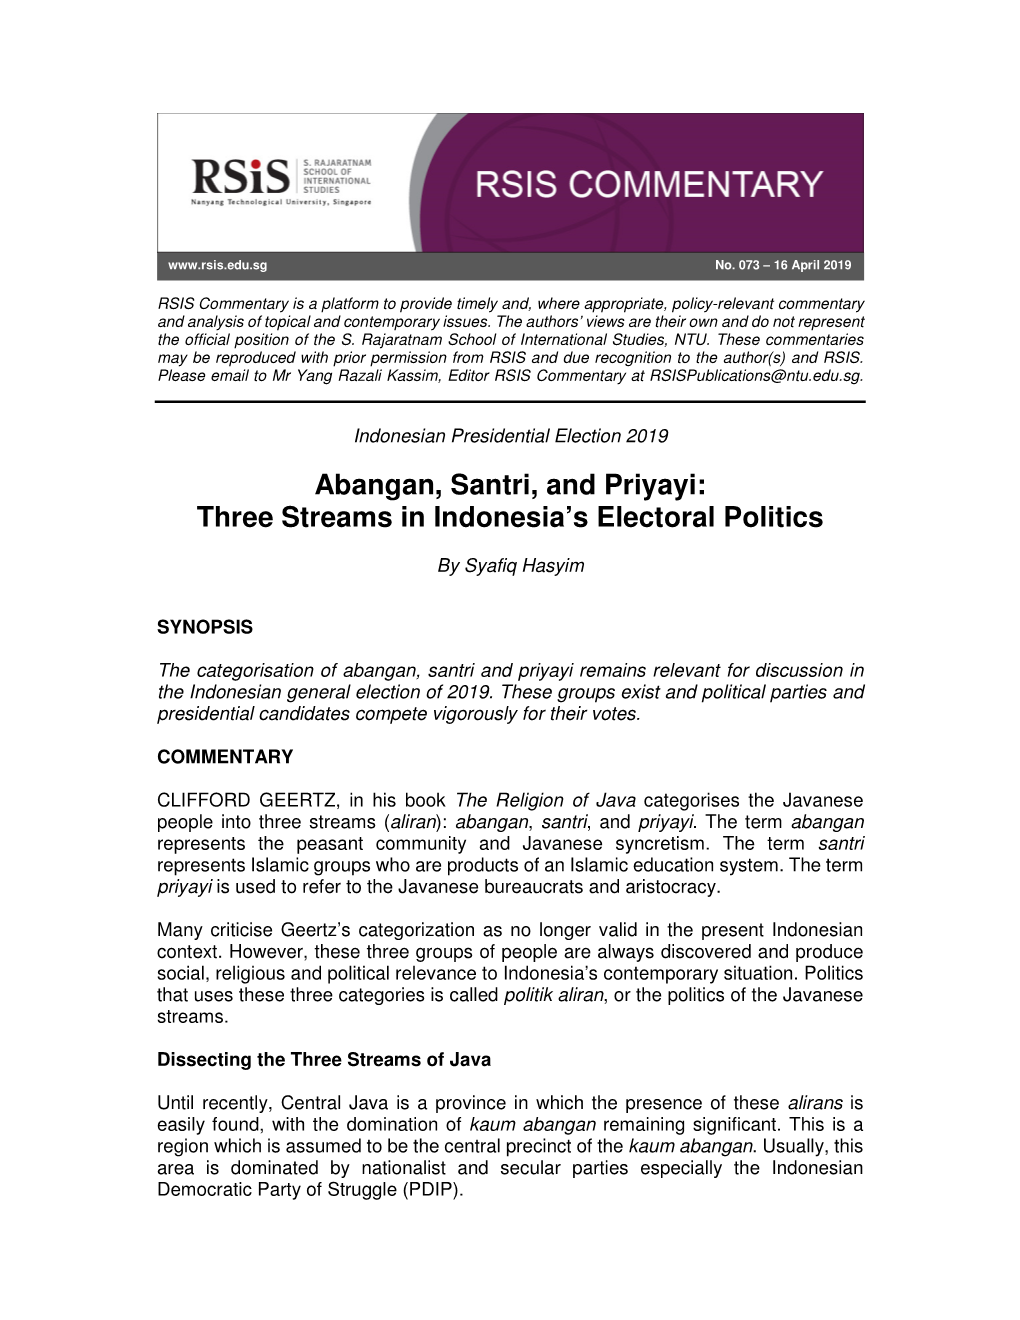 Abangan, Santri, and Priyayi: Three Streams in Indonesia’S Electoral Politics